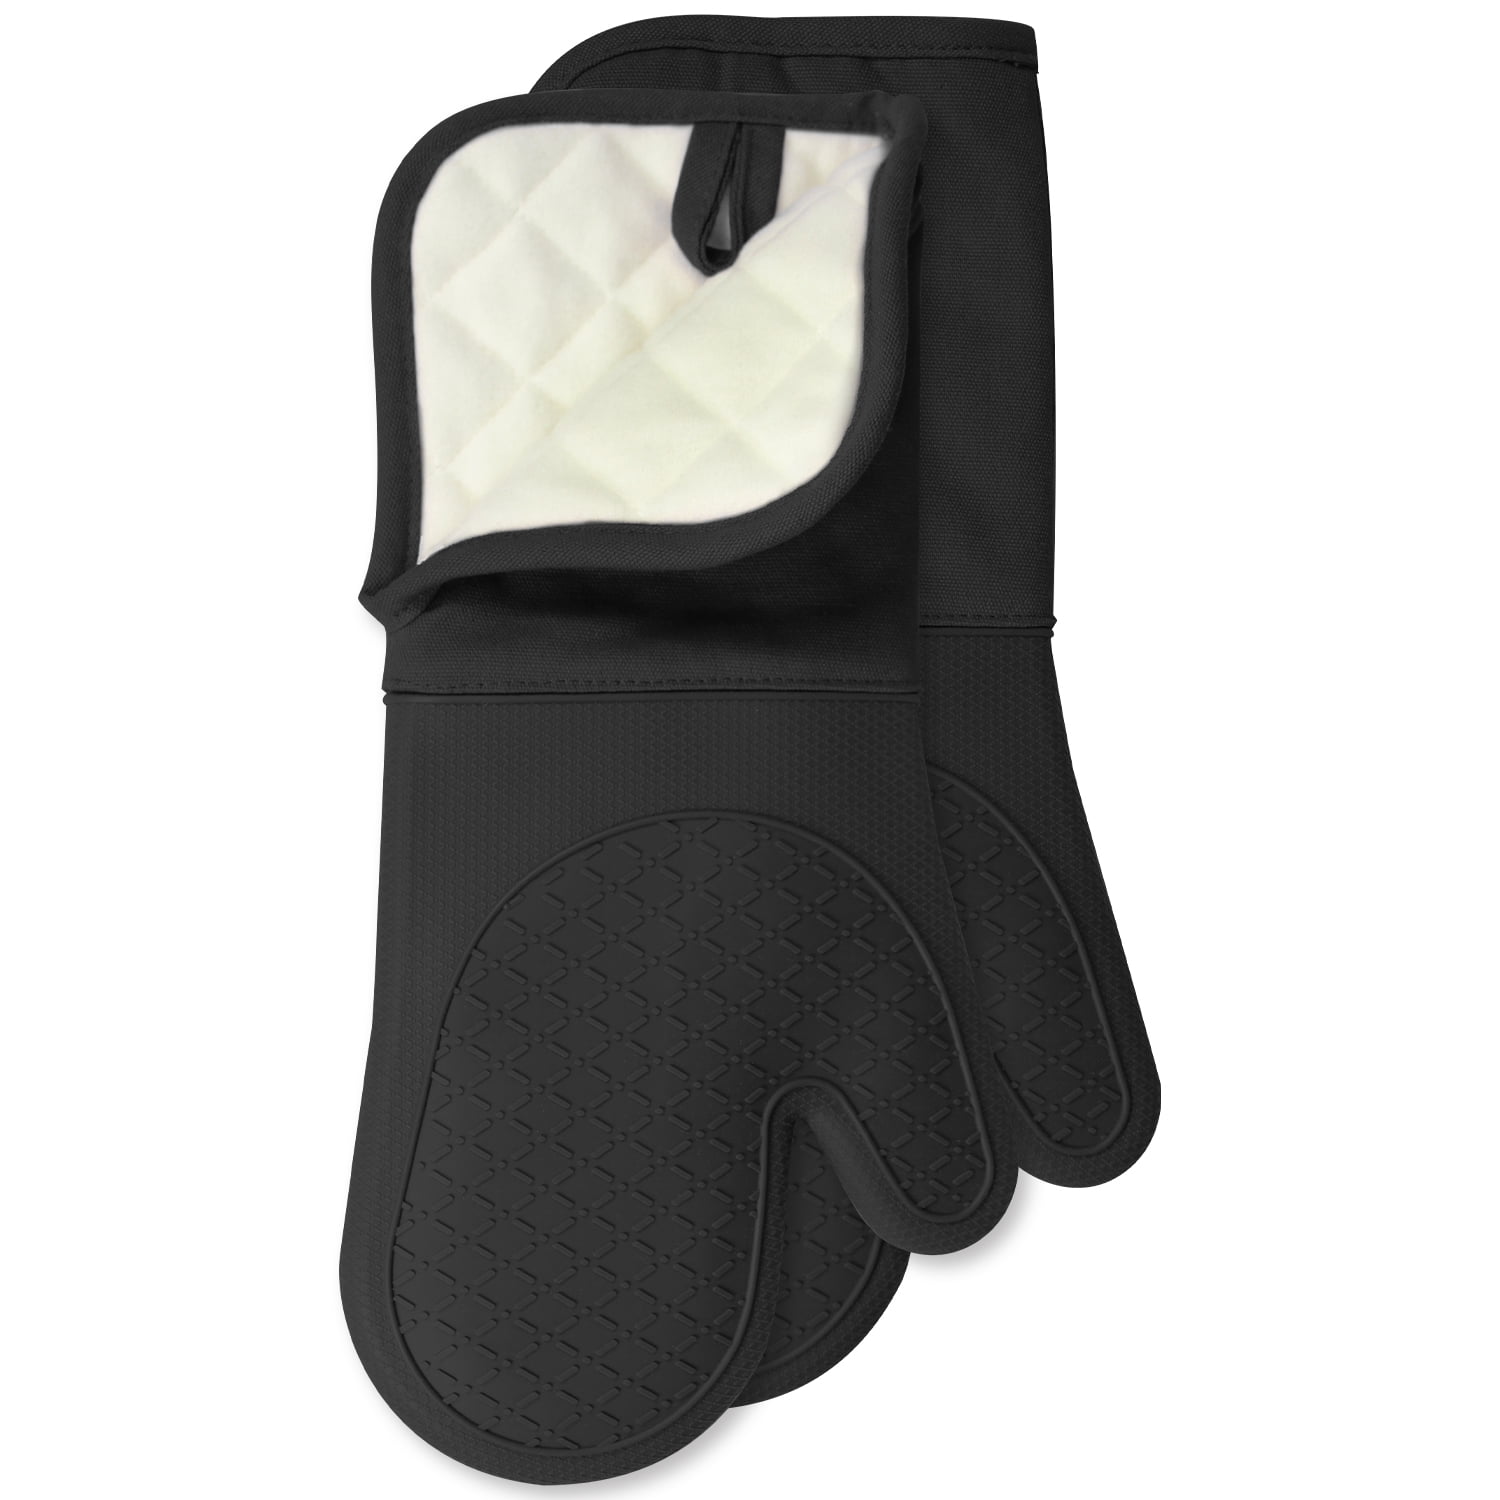 Eurow Oven Gloves with Silicone, Non-Slip, Black